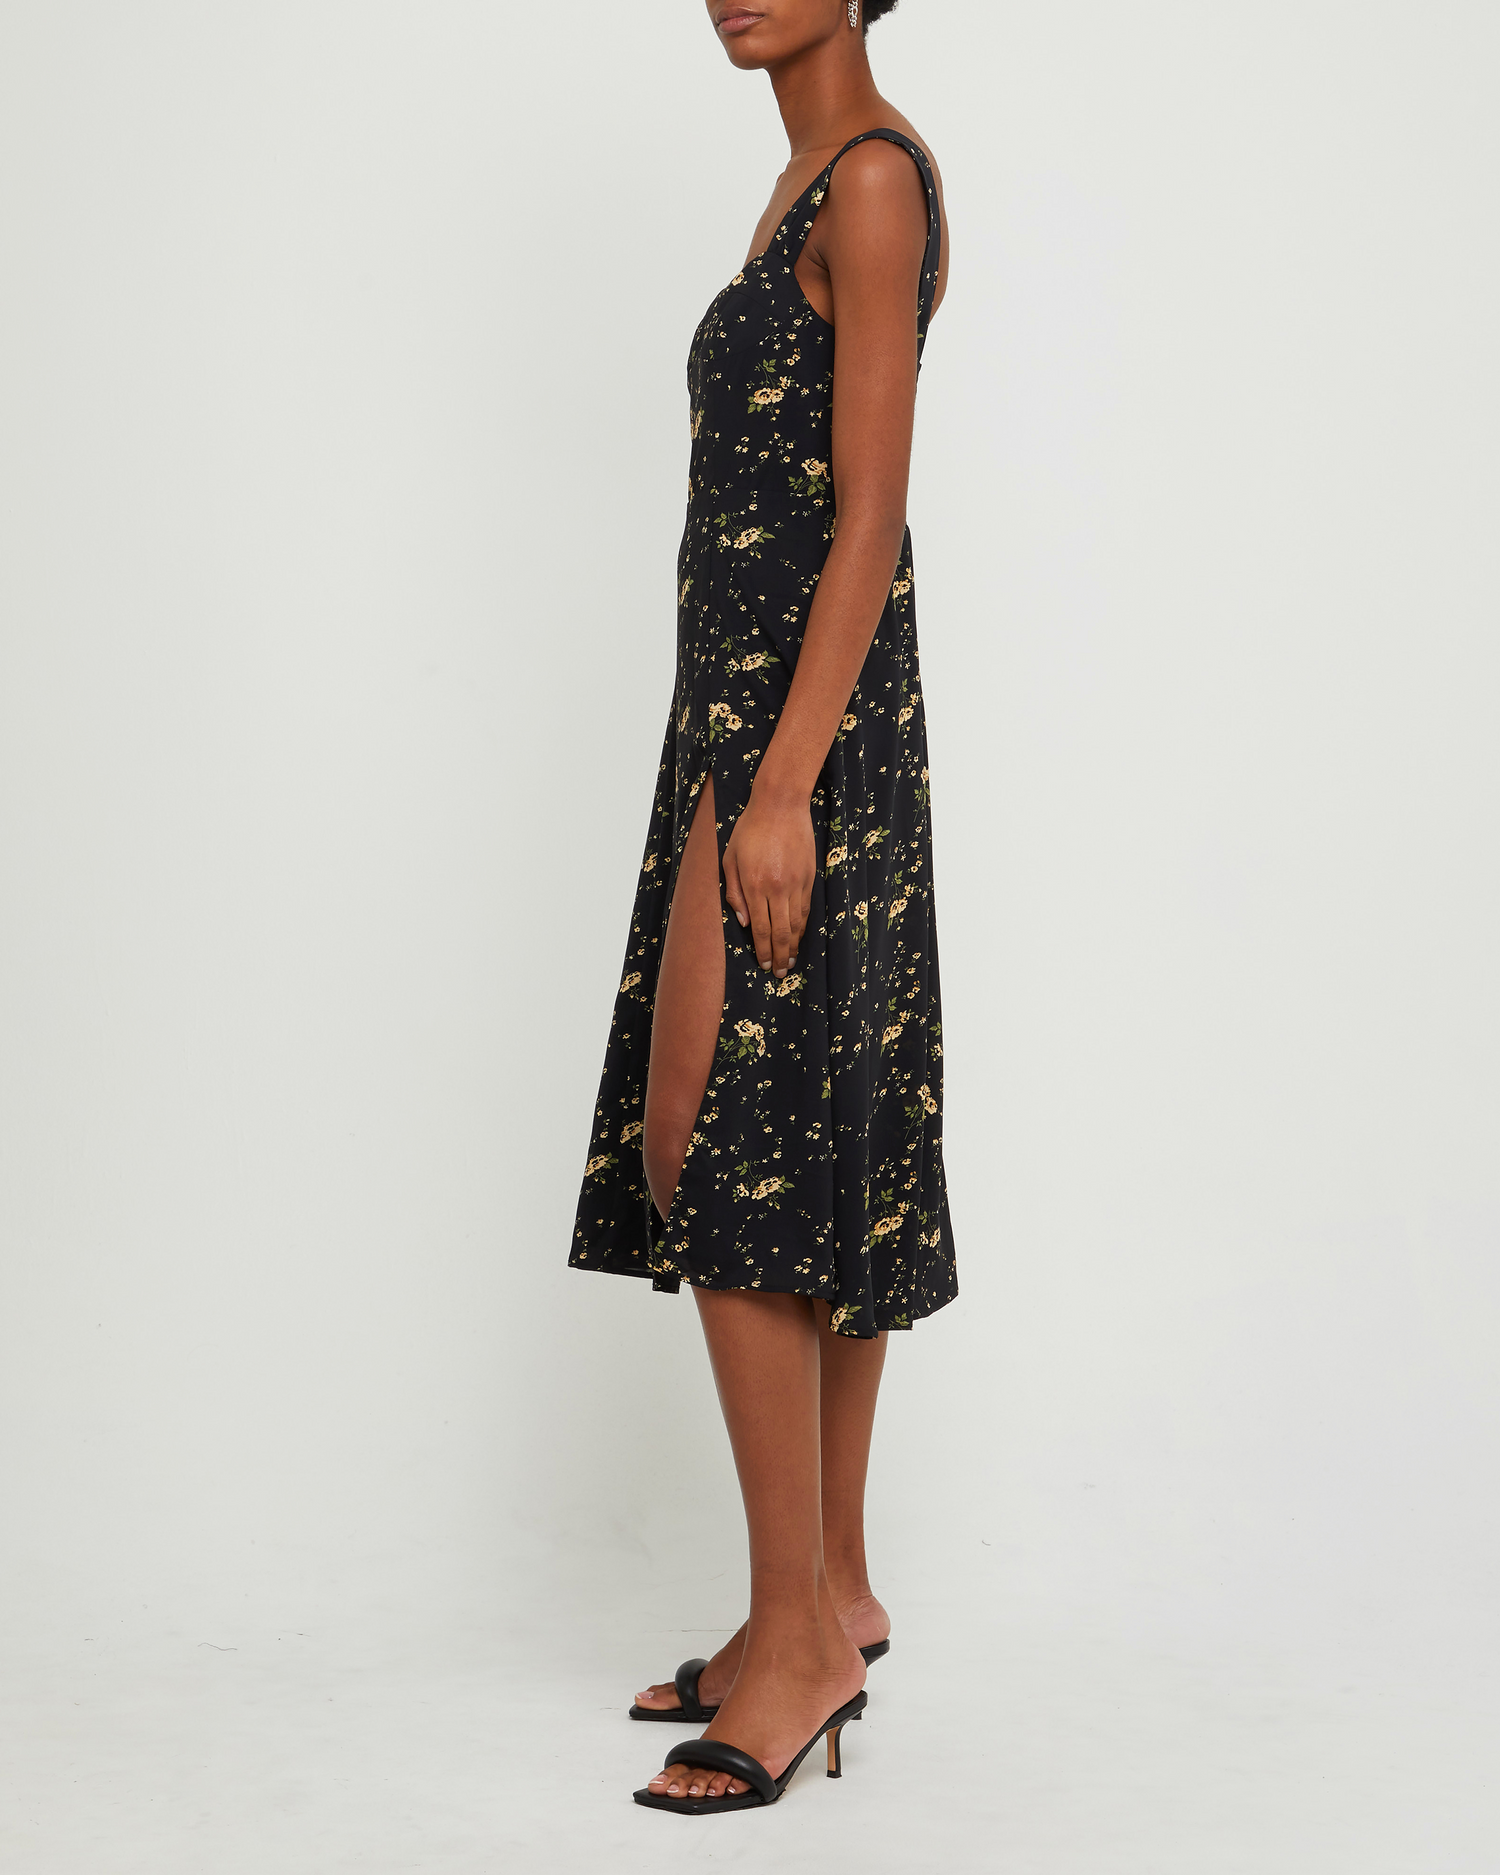 Sixth image of Amari Dress, a black midi dress, side slit, floral, tank